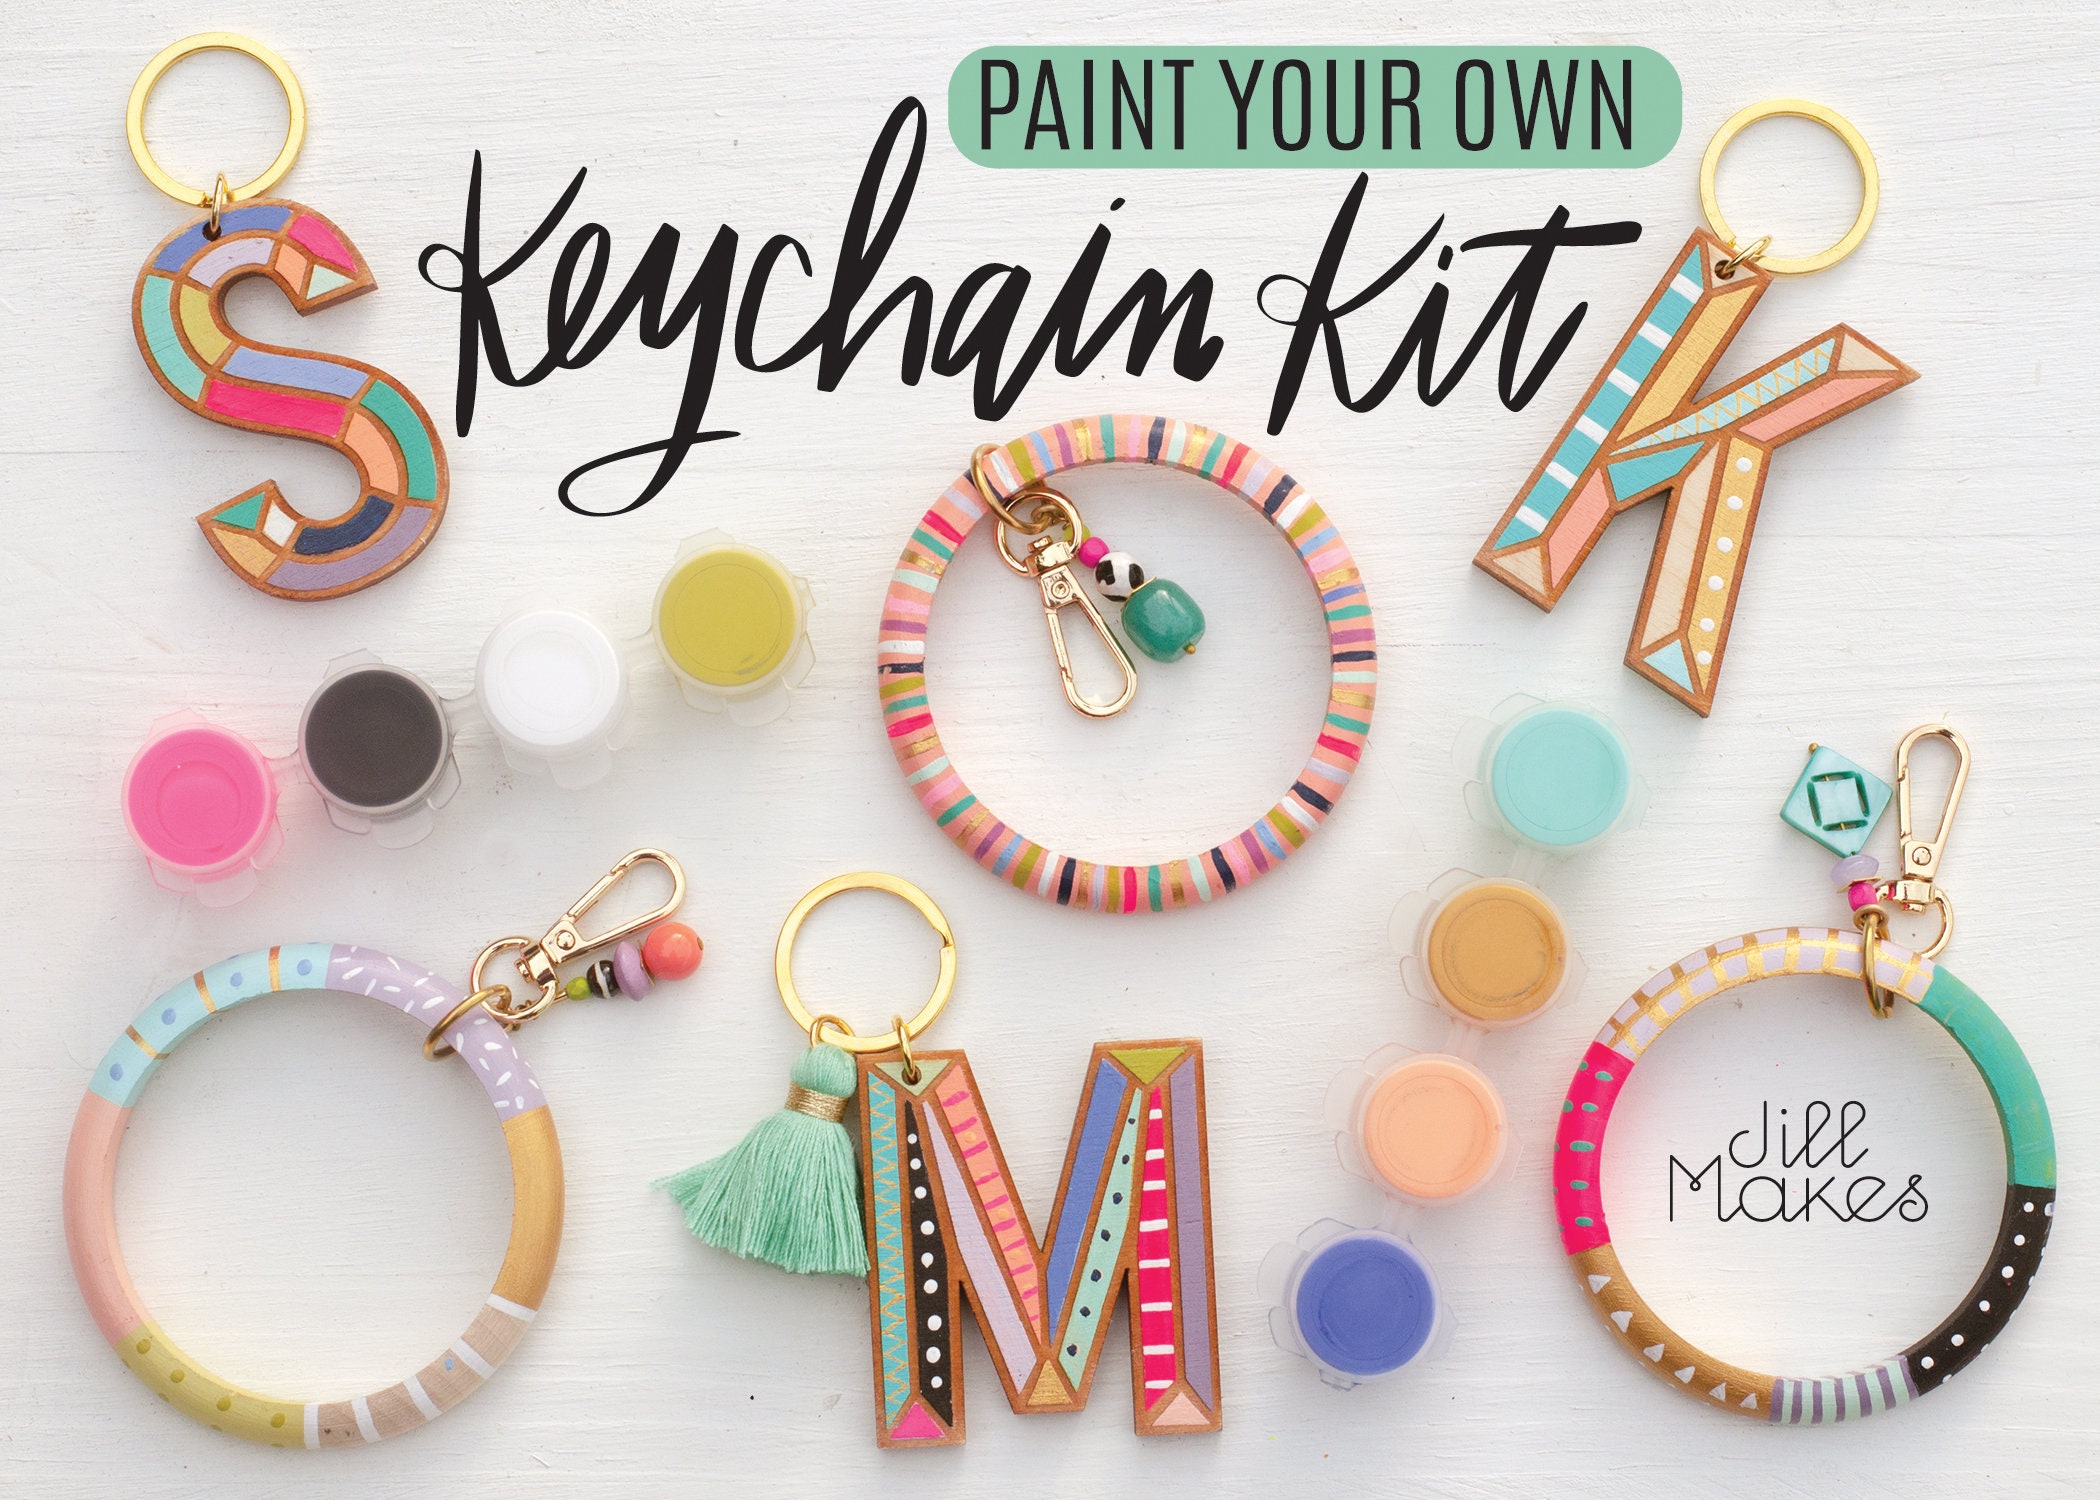 DIY Keychain Painting Kit Craft Kit DIY Kit Jewelry